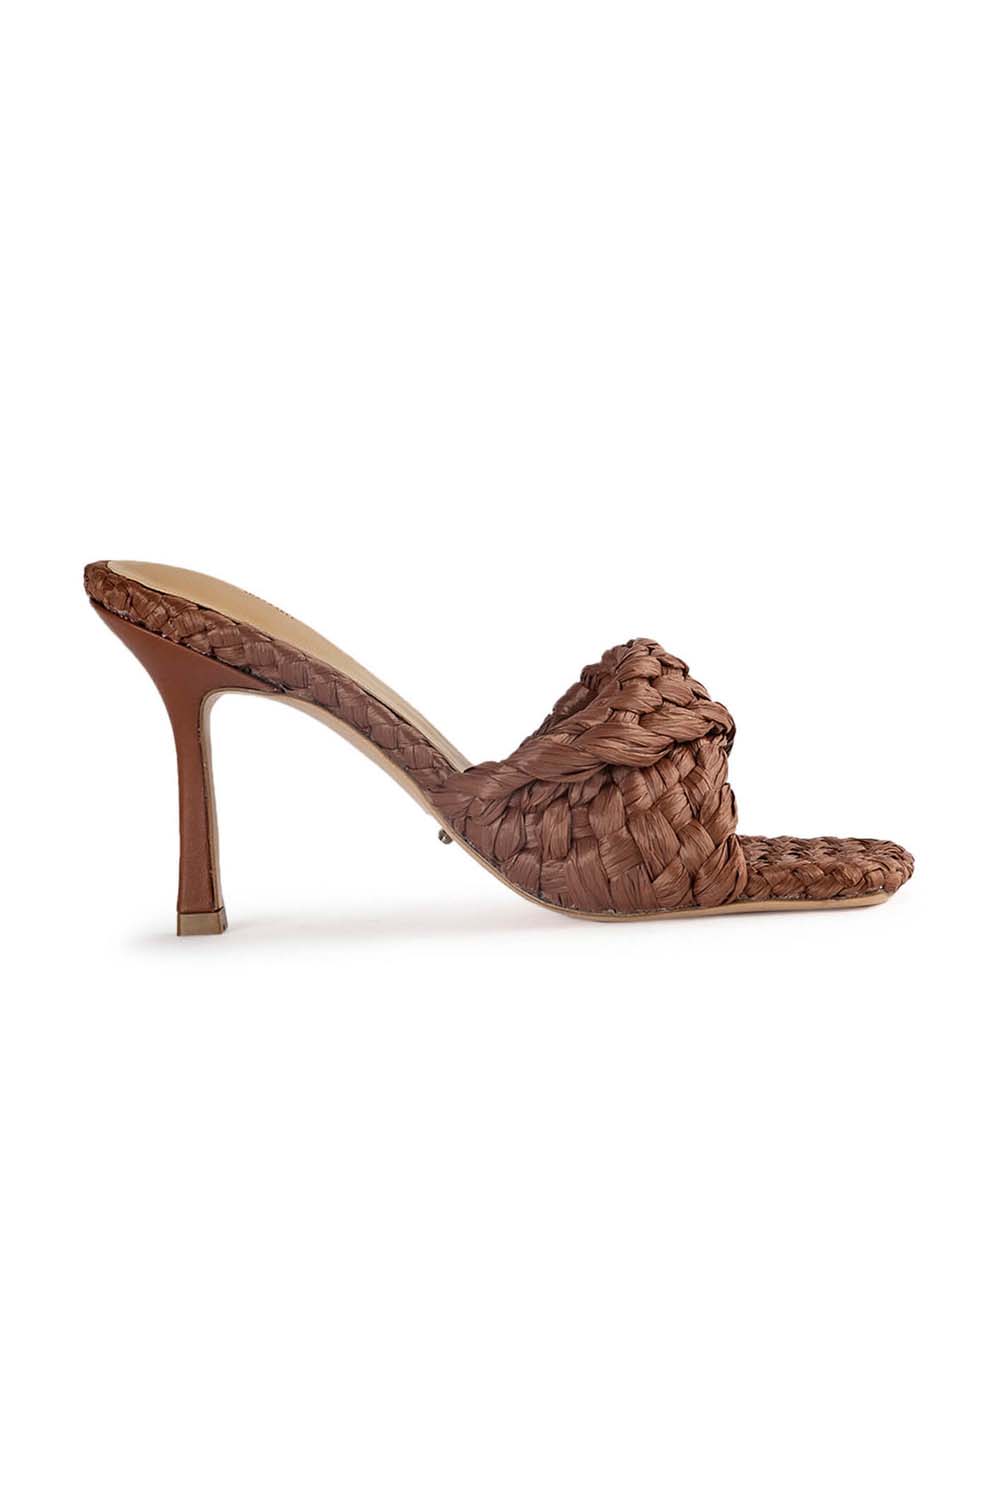 Chocolate Tony Bianco Lourdes 9.5cm Women's Heels | 6849-IGYZT